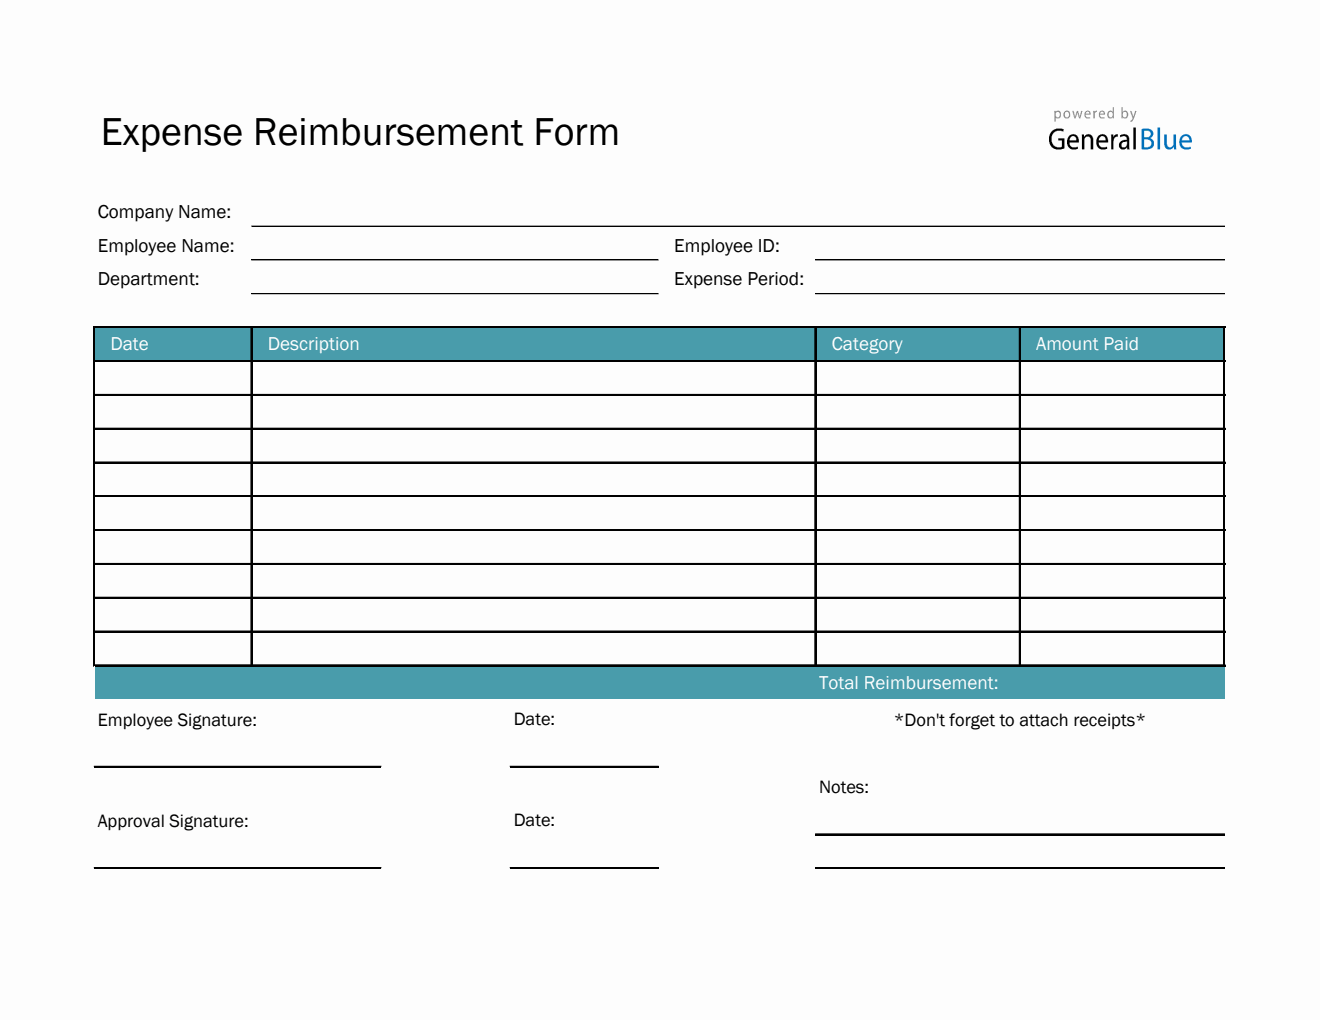 Simple Expense Reimbursement Form in Excel (Teal)